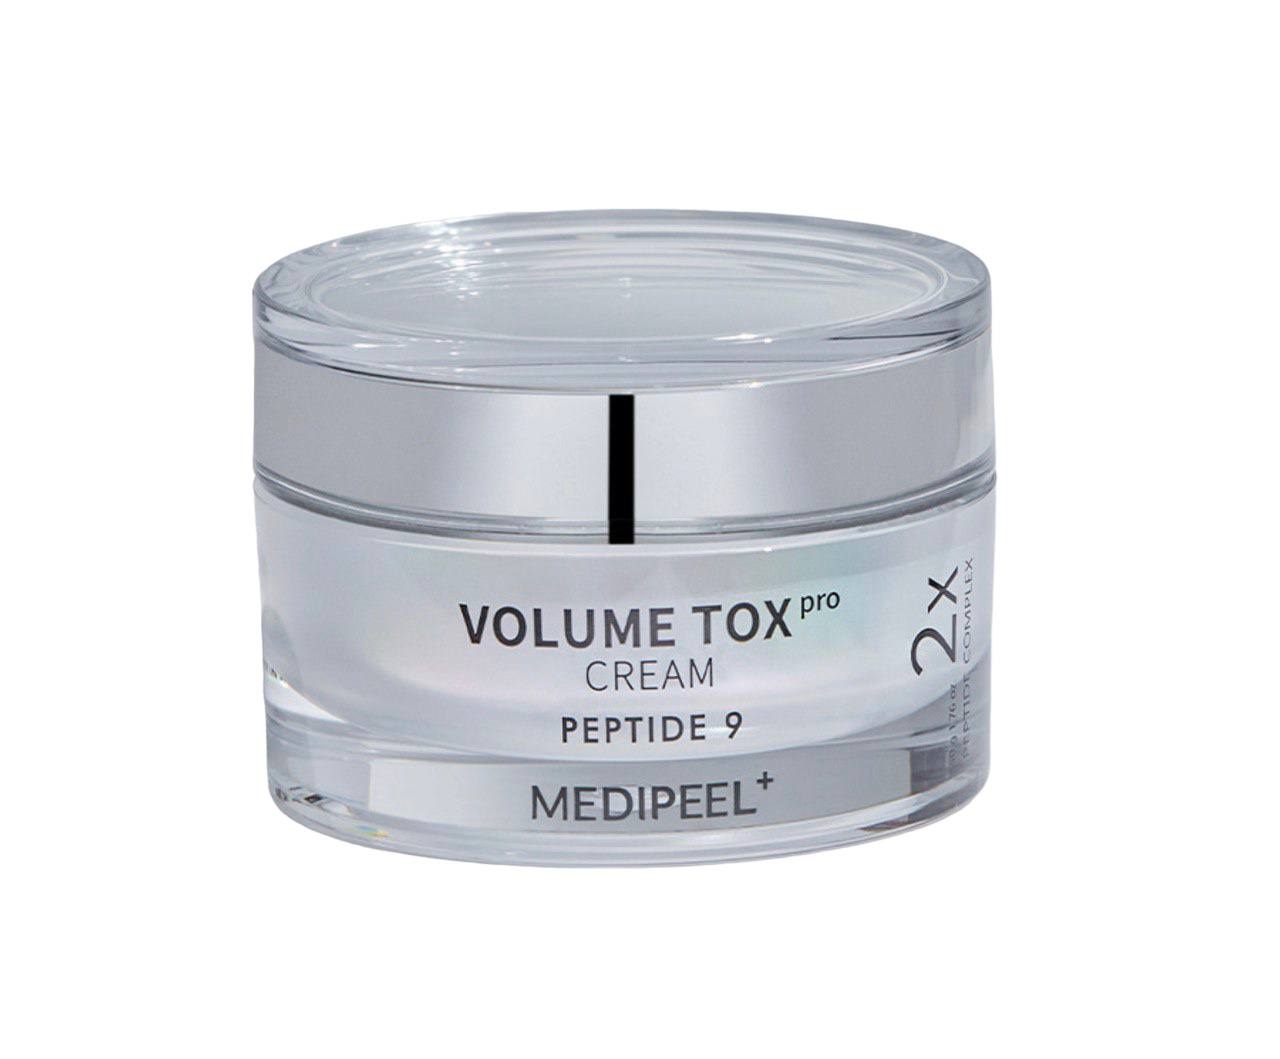 Омолаживающий крем для упругости кожи Medi-Peel Peptide 9 Volume Tox Cream Pro 50 мл medi peel укрепляющие патчи с гидролизатом коллагена 96